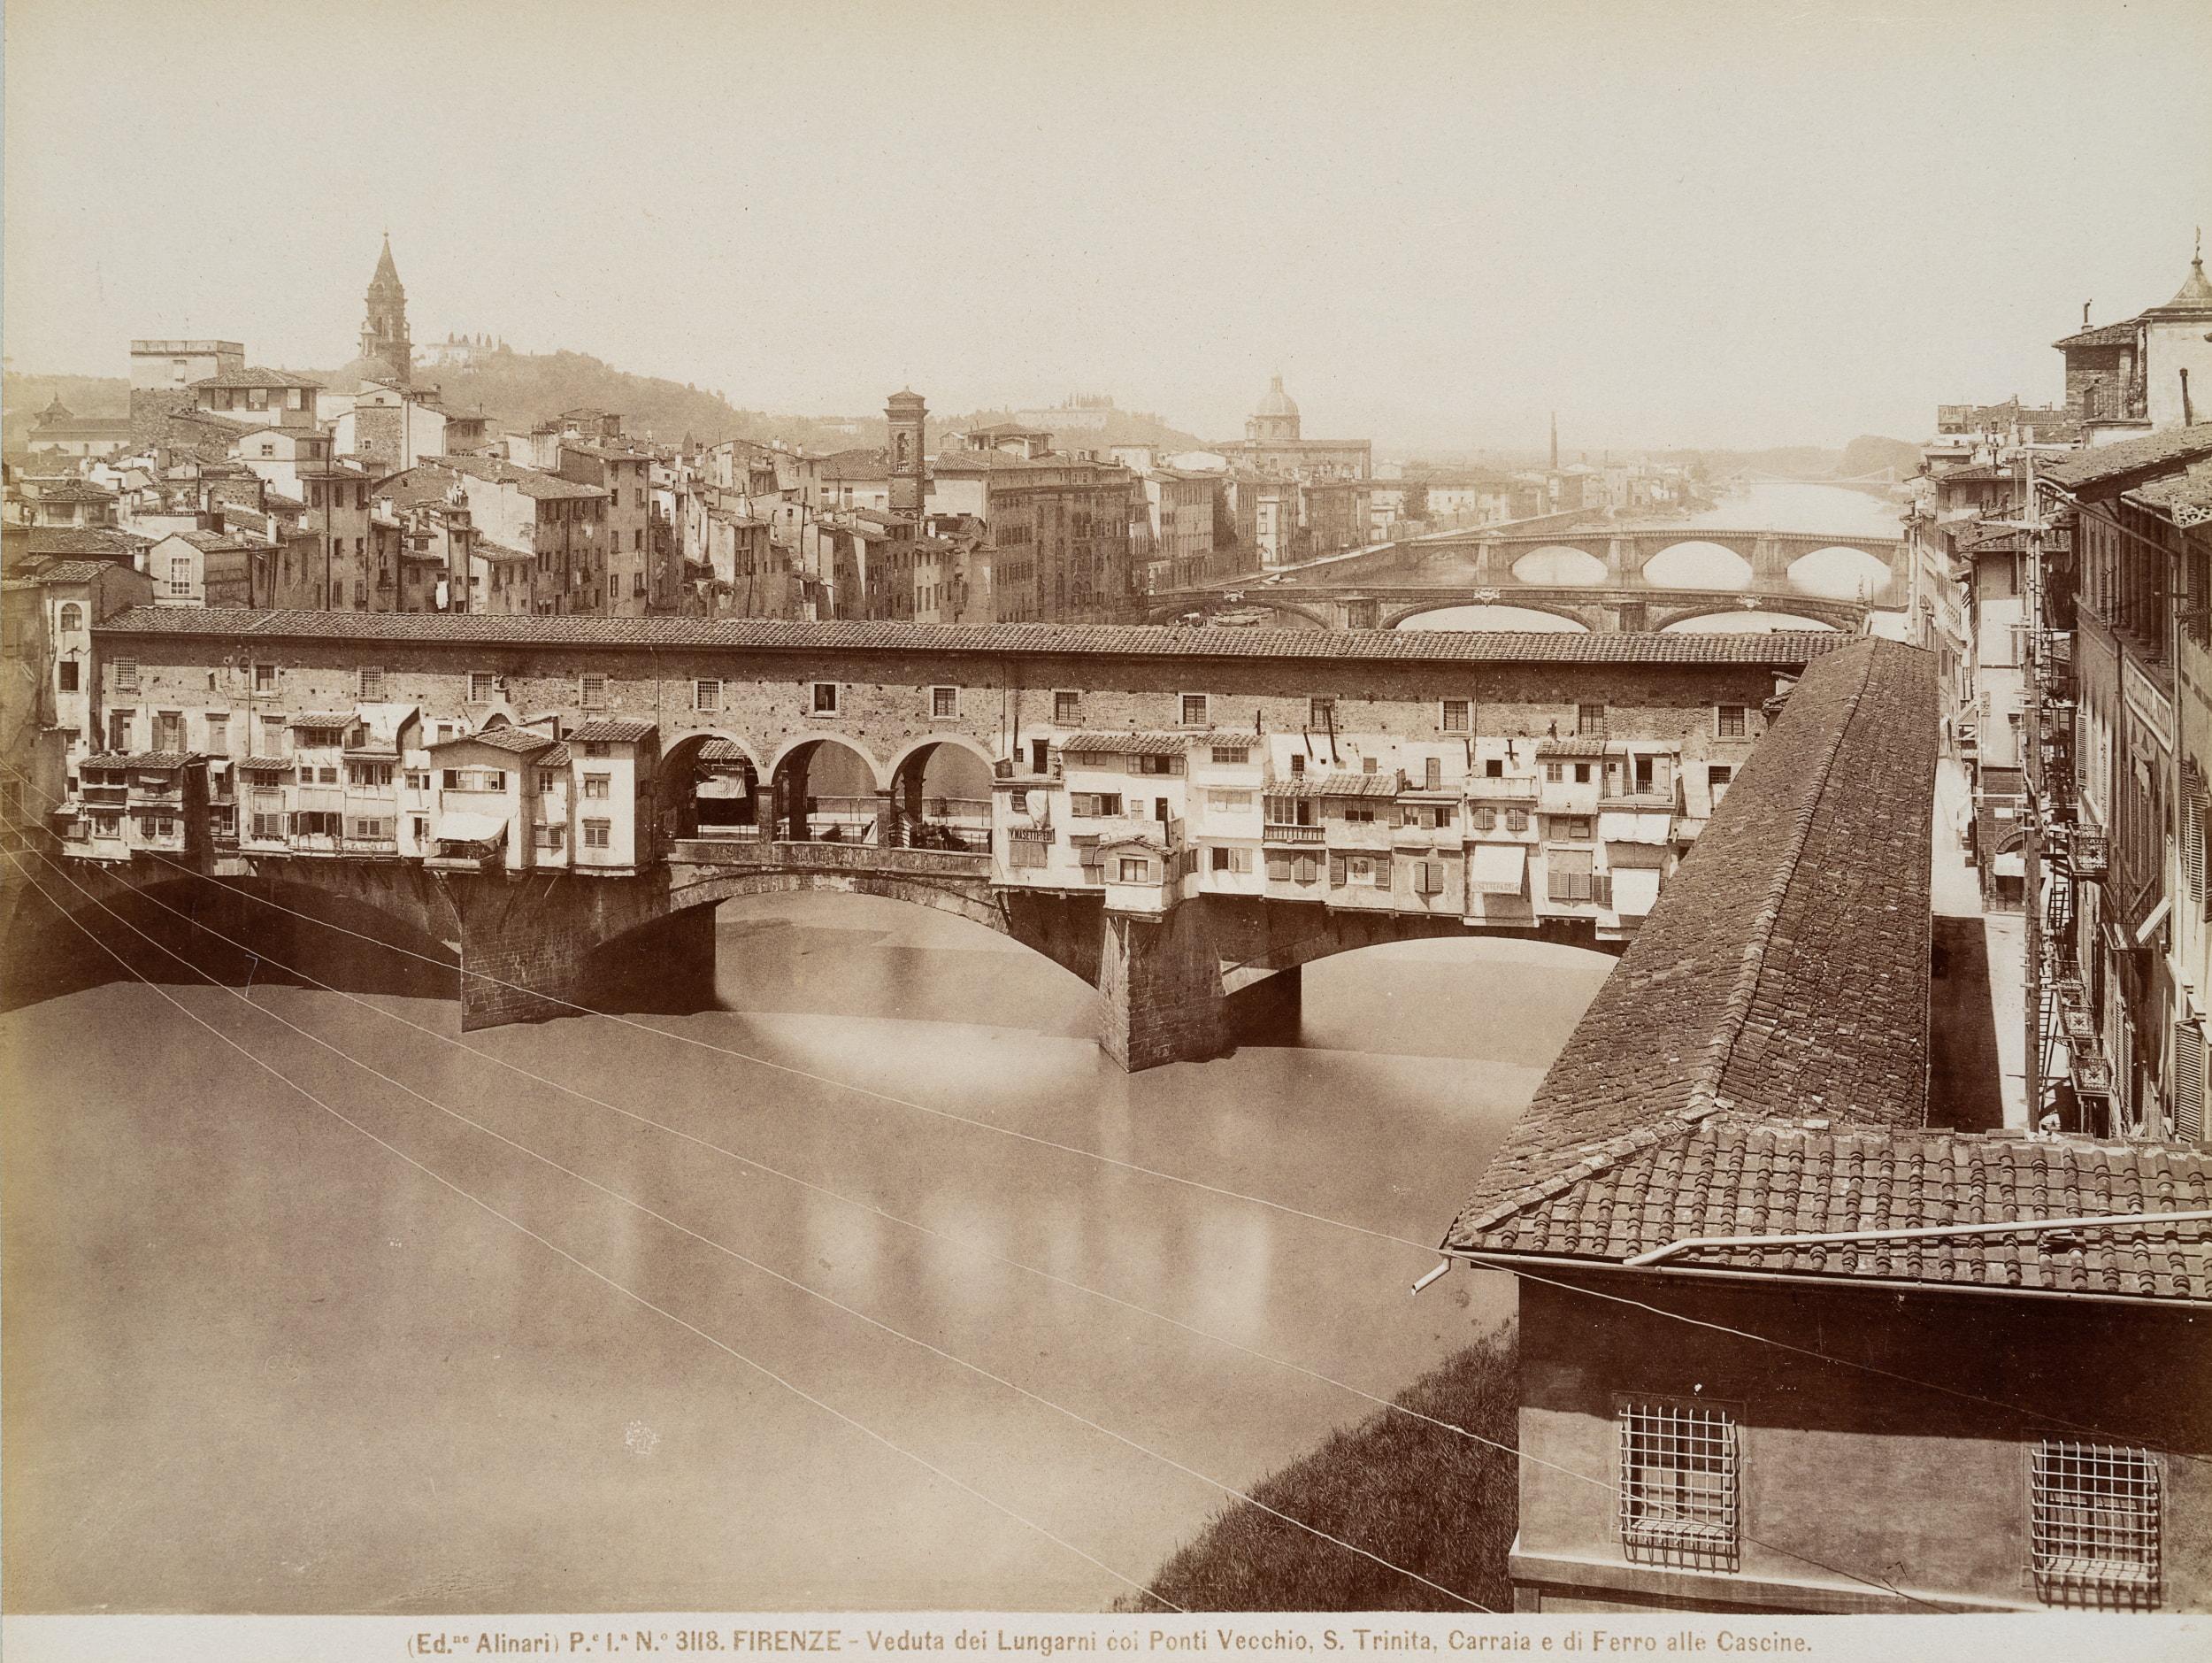 Landscape Photograph Fratelli Alinari - Ponte Vecchio au-dessus de l'Arno, Florence